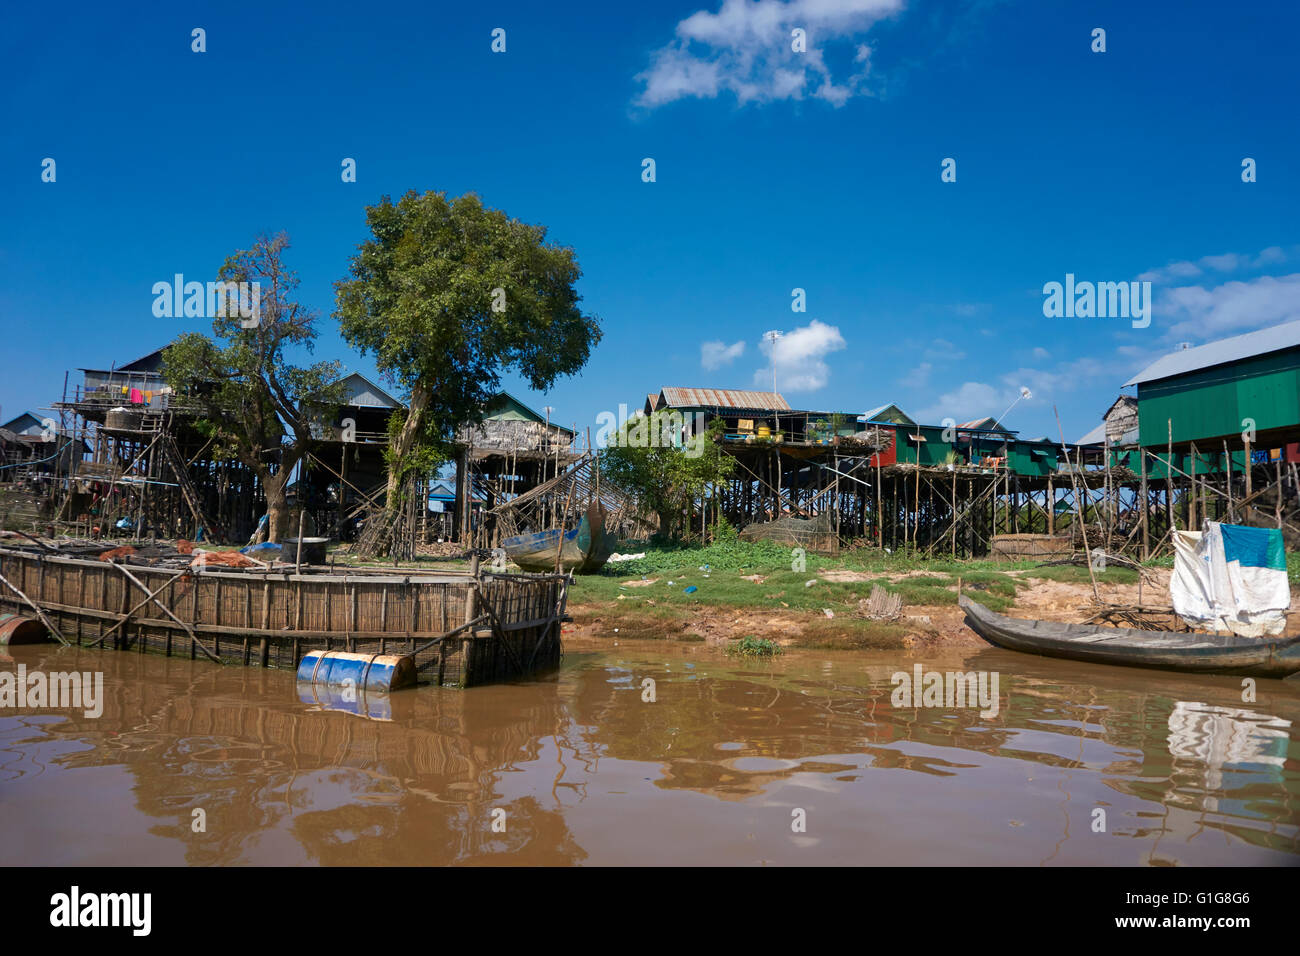 Village flottant de KOMPONG PHLUK, Siem Reap, Cambodge Banque D'Images